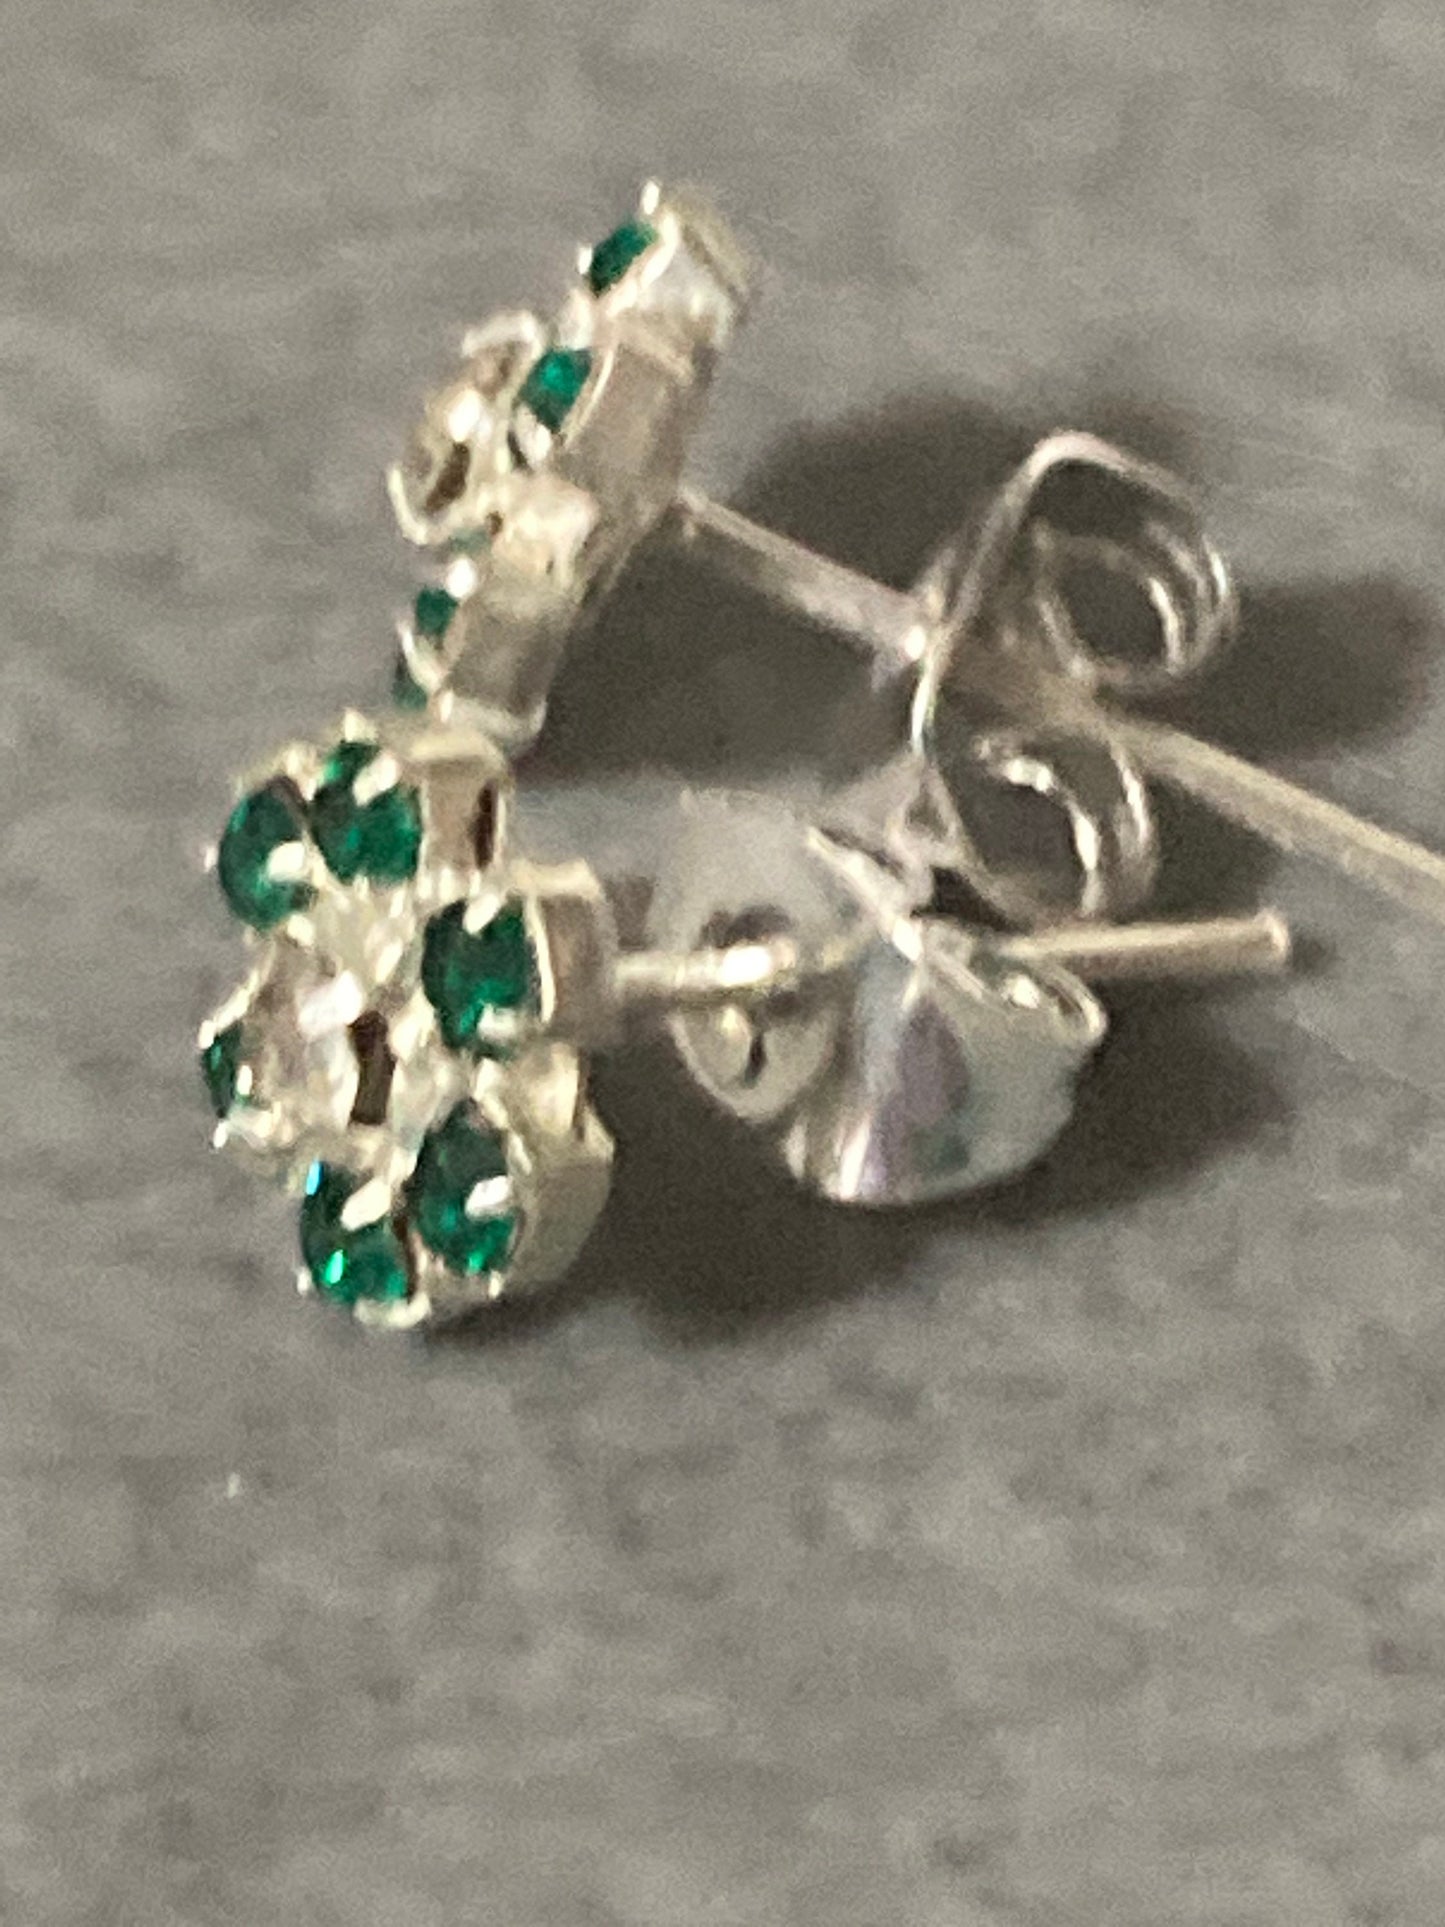 Small 6mm diamanté stud earrings emerald green